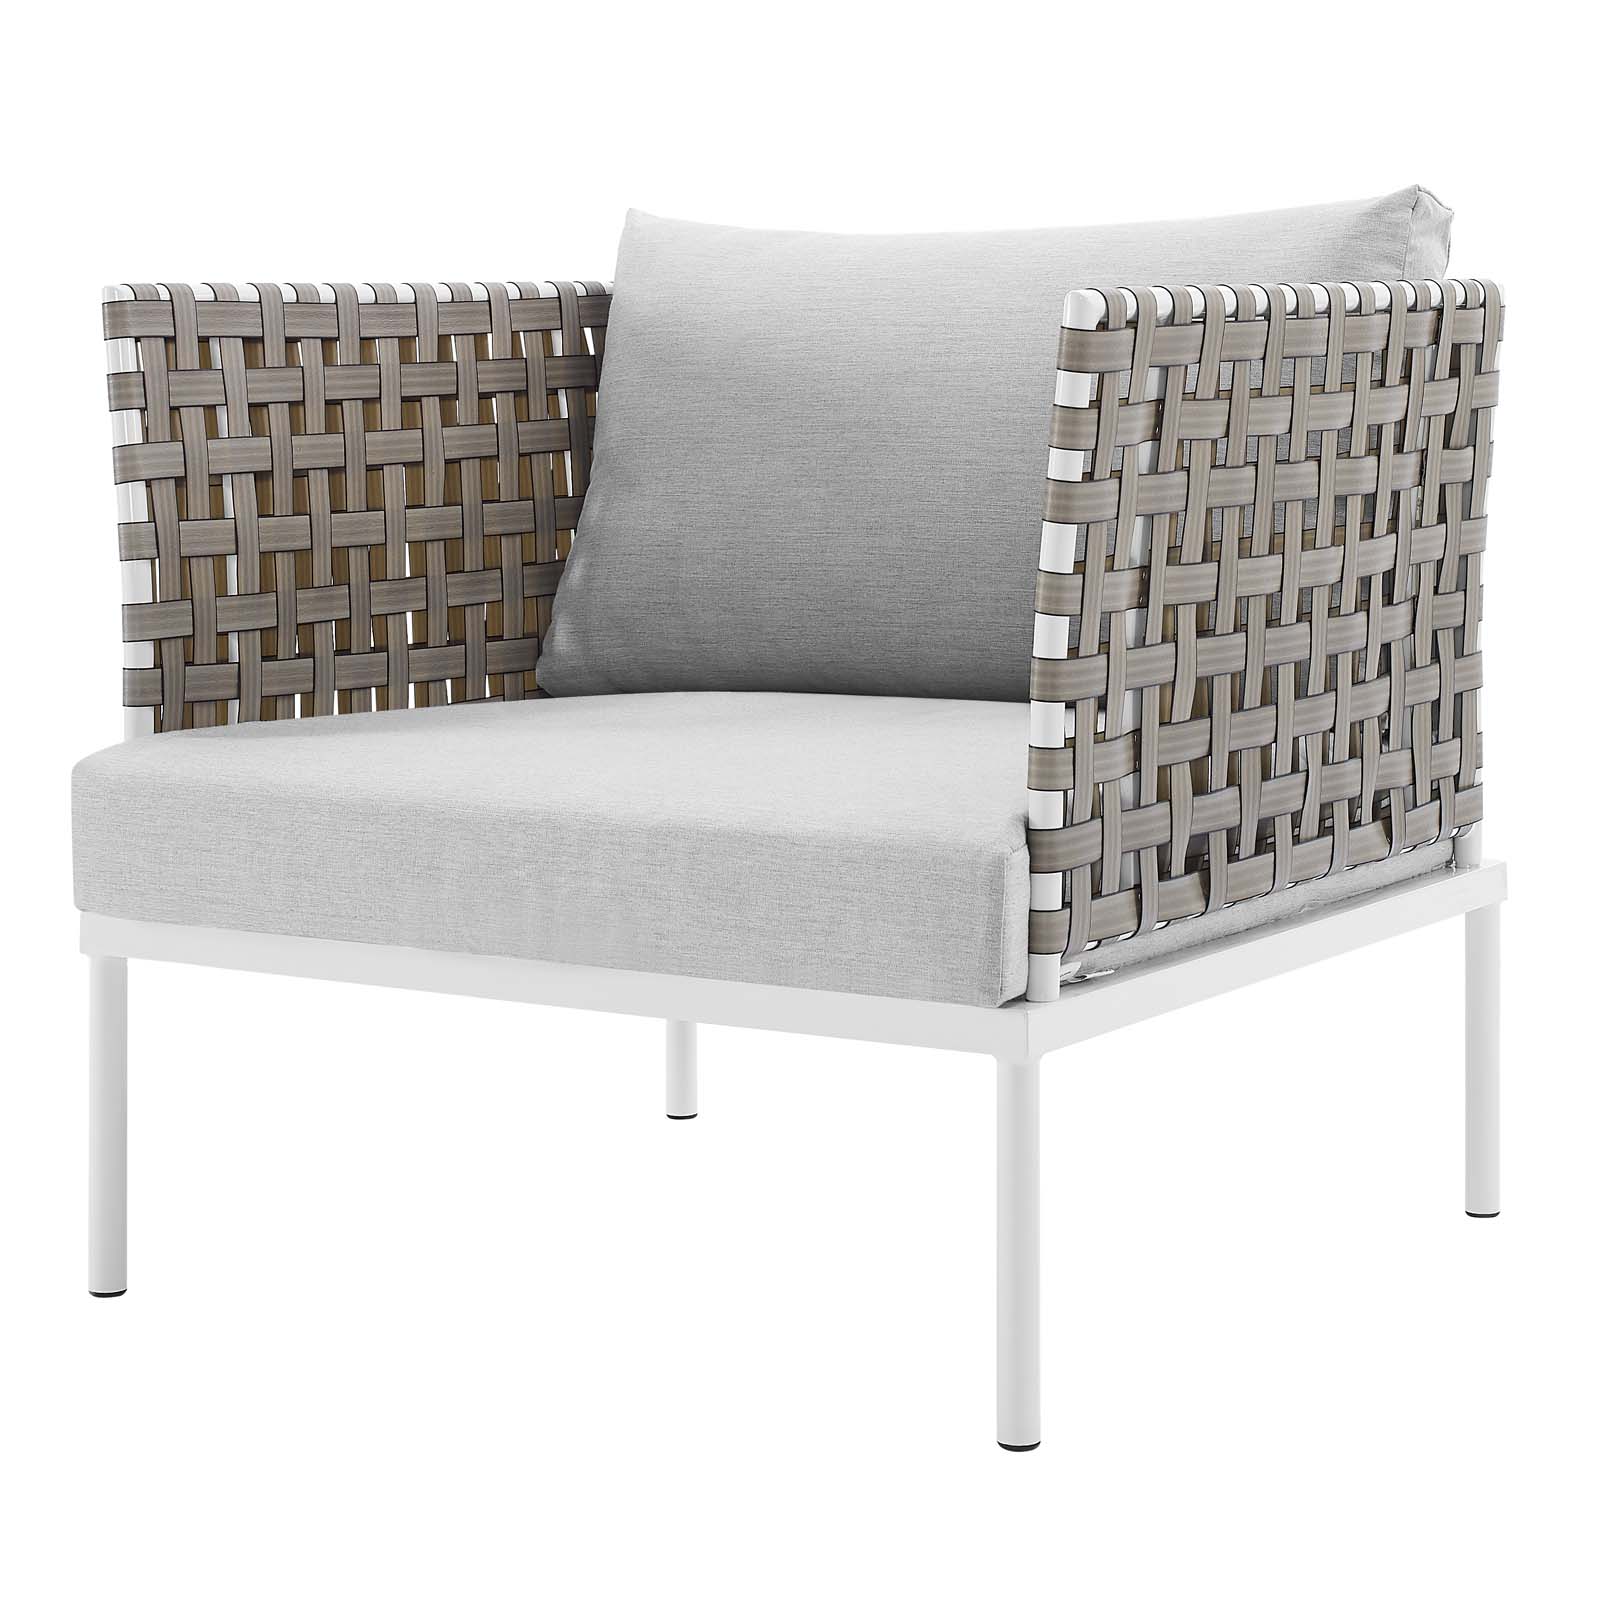 Side Lounge Chair Armchair, Sunbrella, Aluminum, Metal, Steel, Grey Gray, Modern Contemporary Urban Design, Outdoor Patio Balcony Cafe Bistro Garden Furniture Hotel Hospitality - image 1 of 8